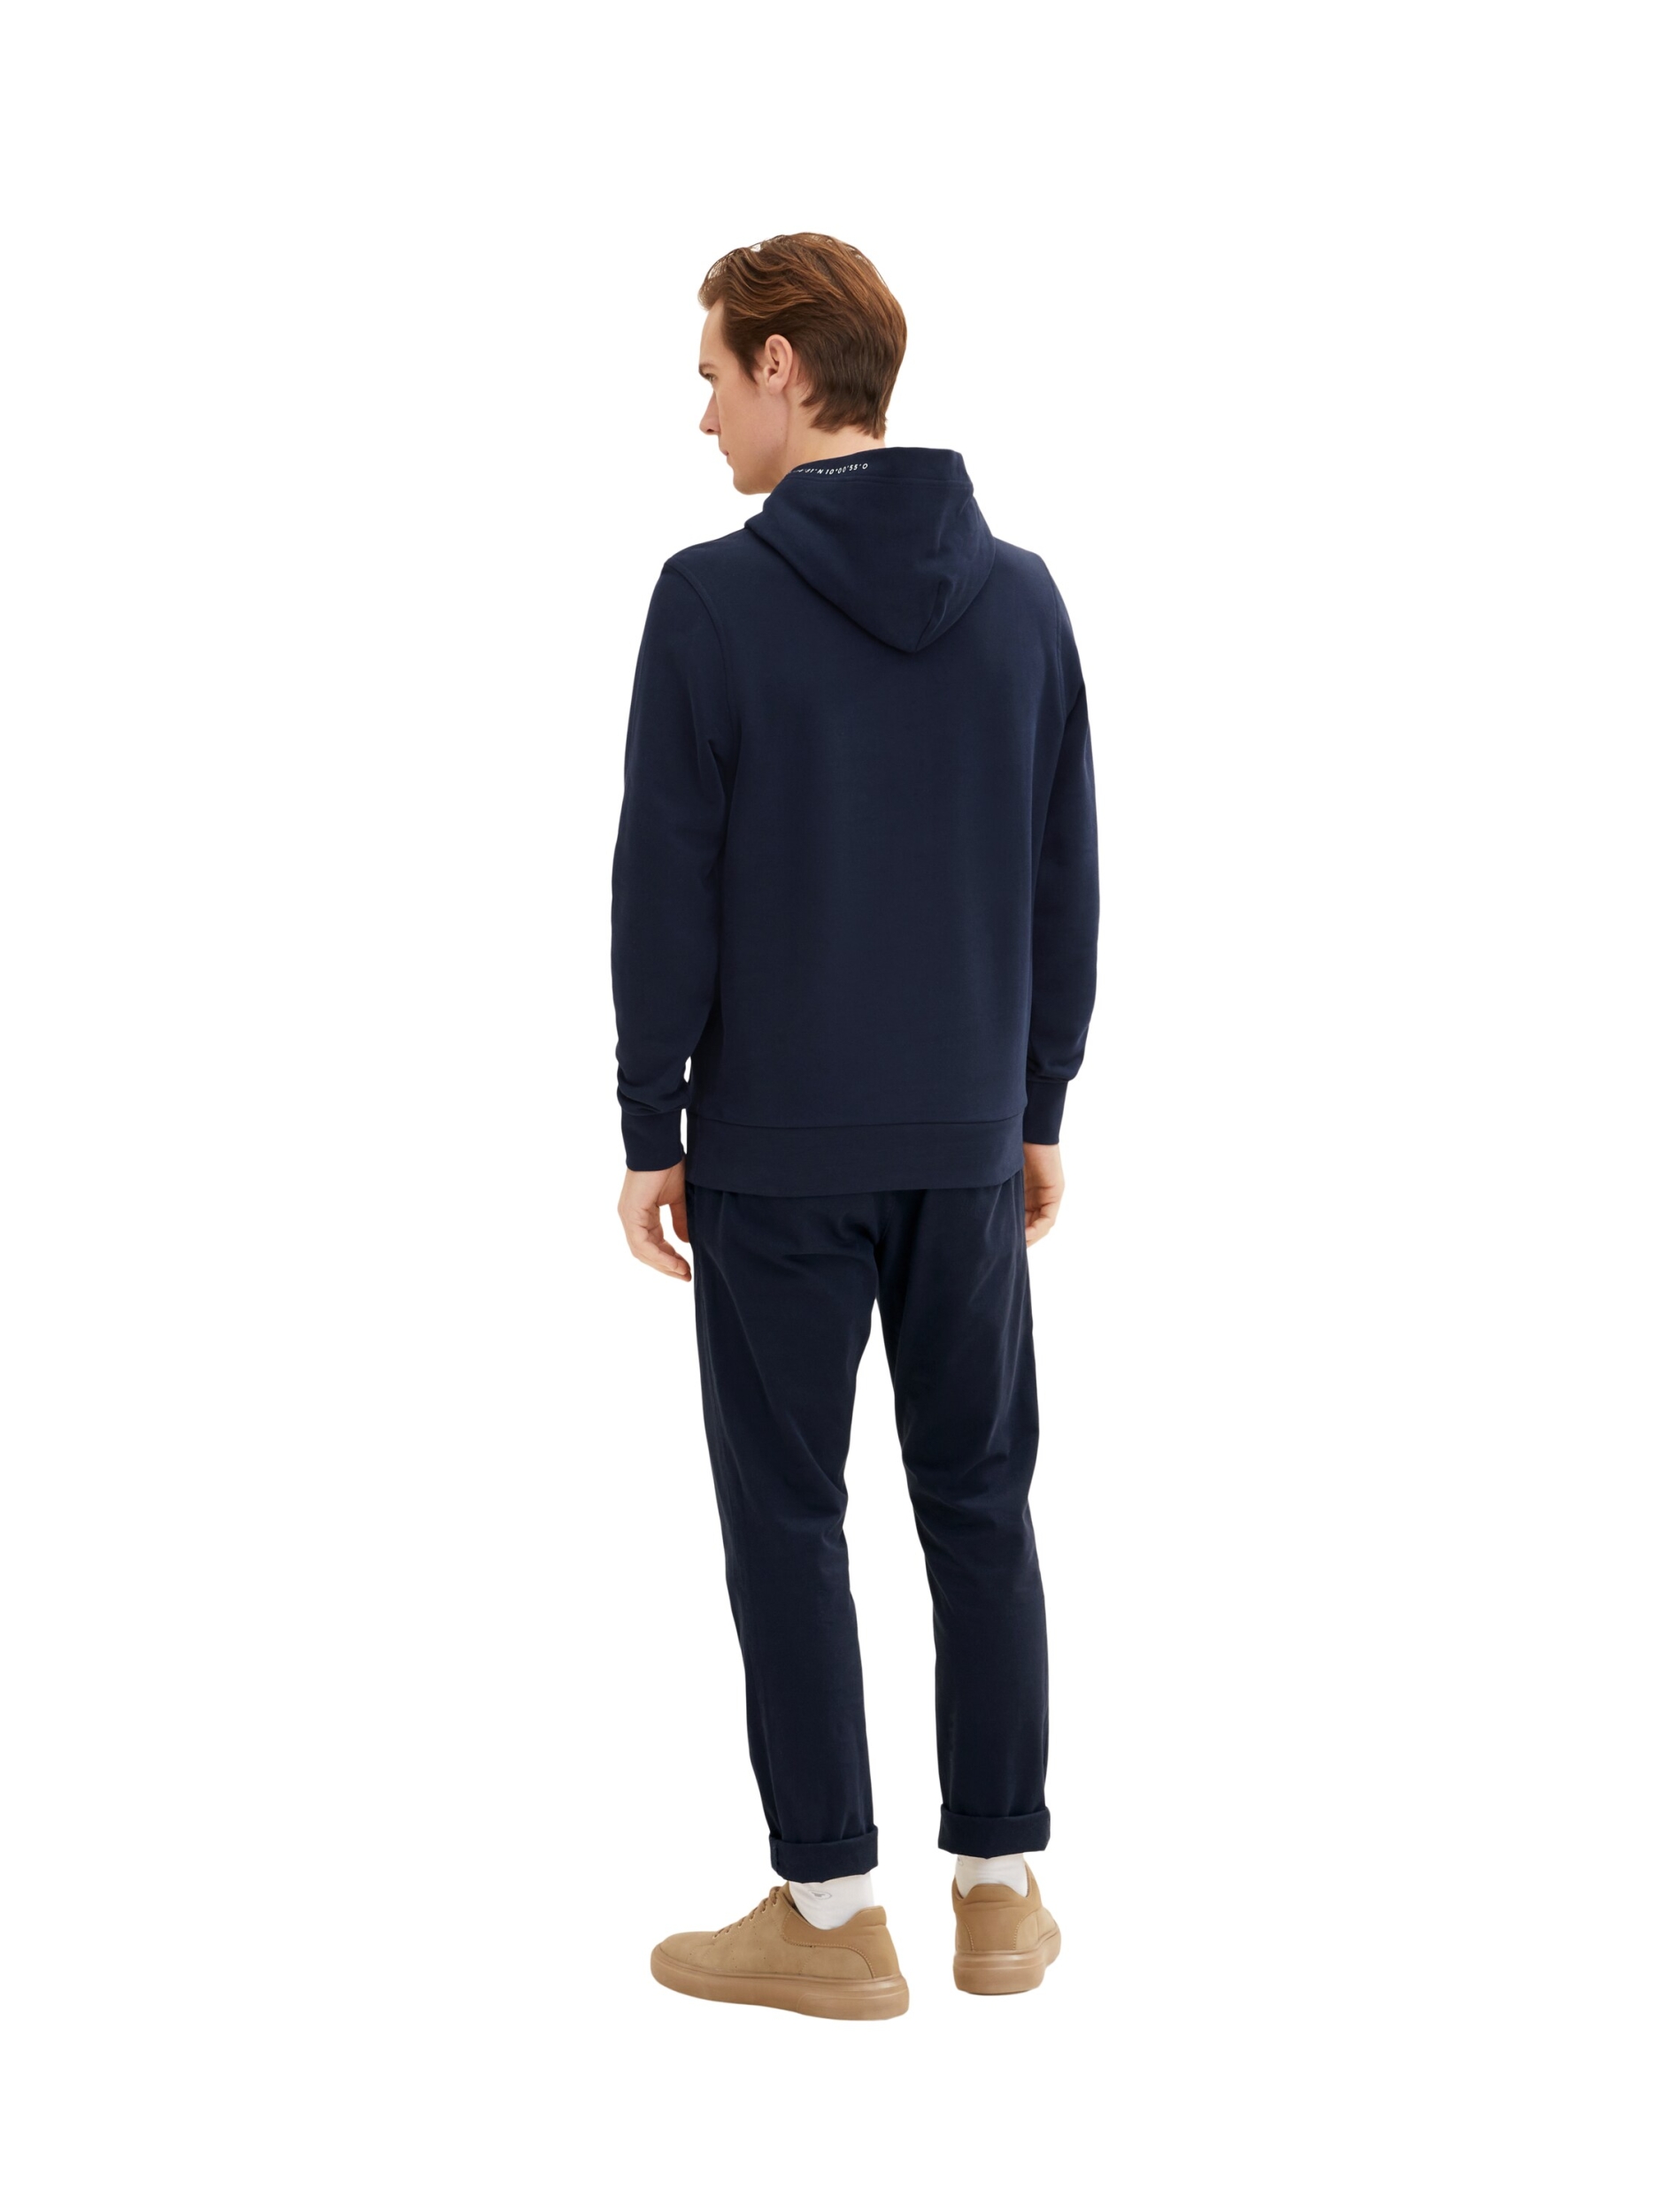 TOM TAILOR hoodie with kaufen online structur